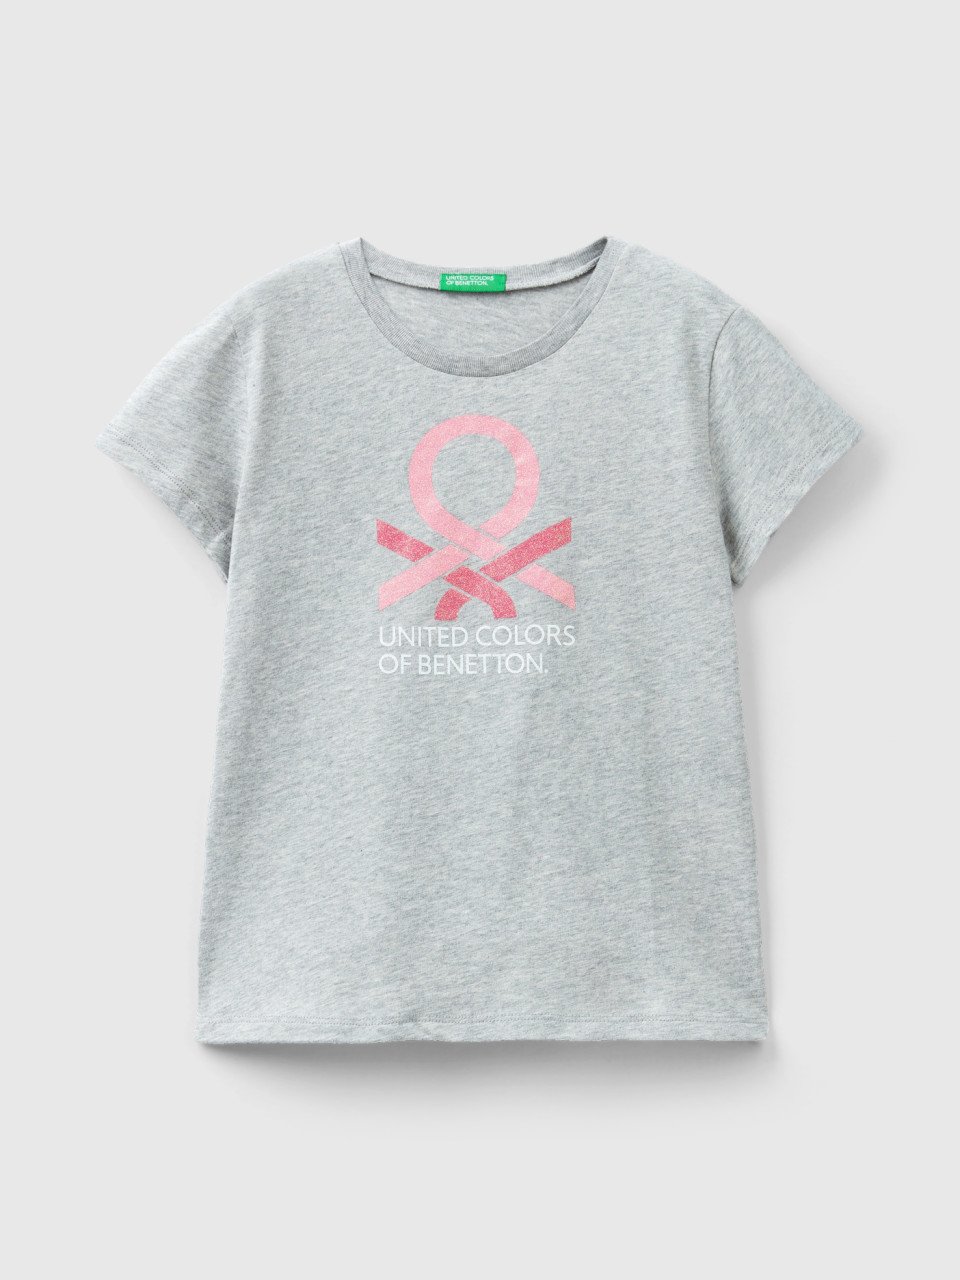 Benetton, T-shirt With Glittery Logo In Organic Cotton, Light Gray, Kids